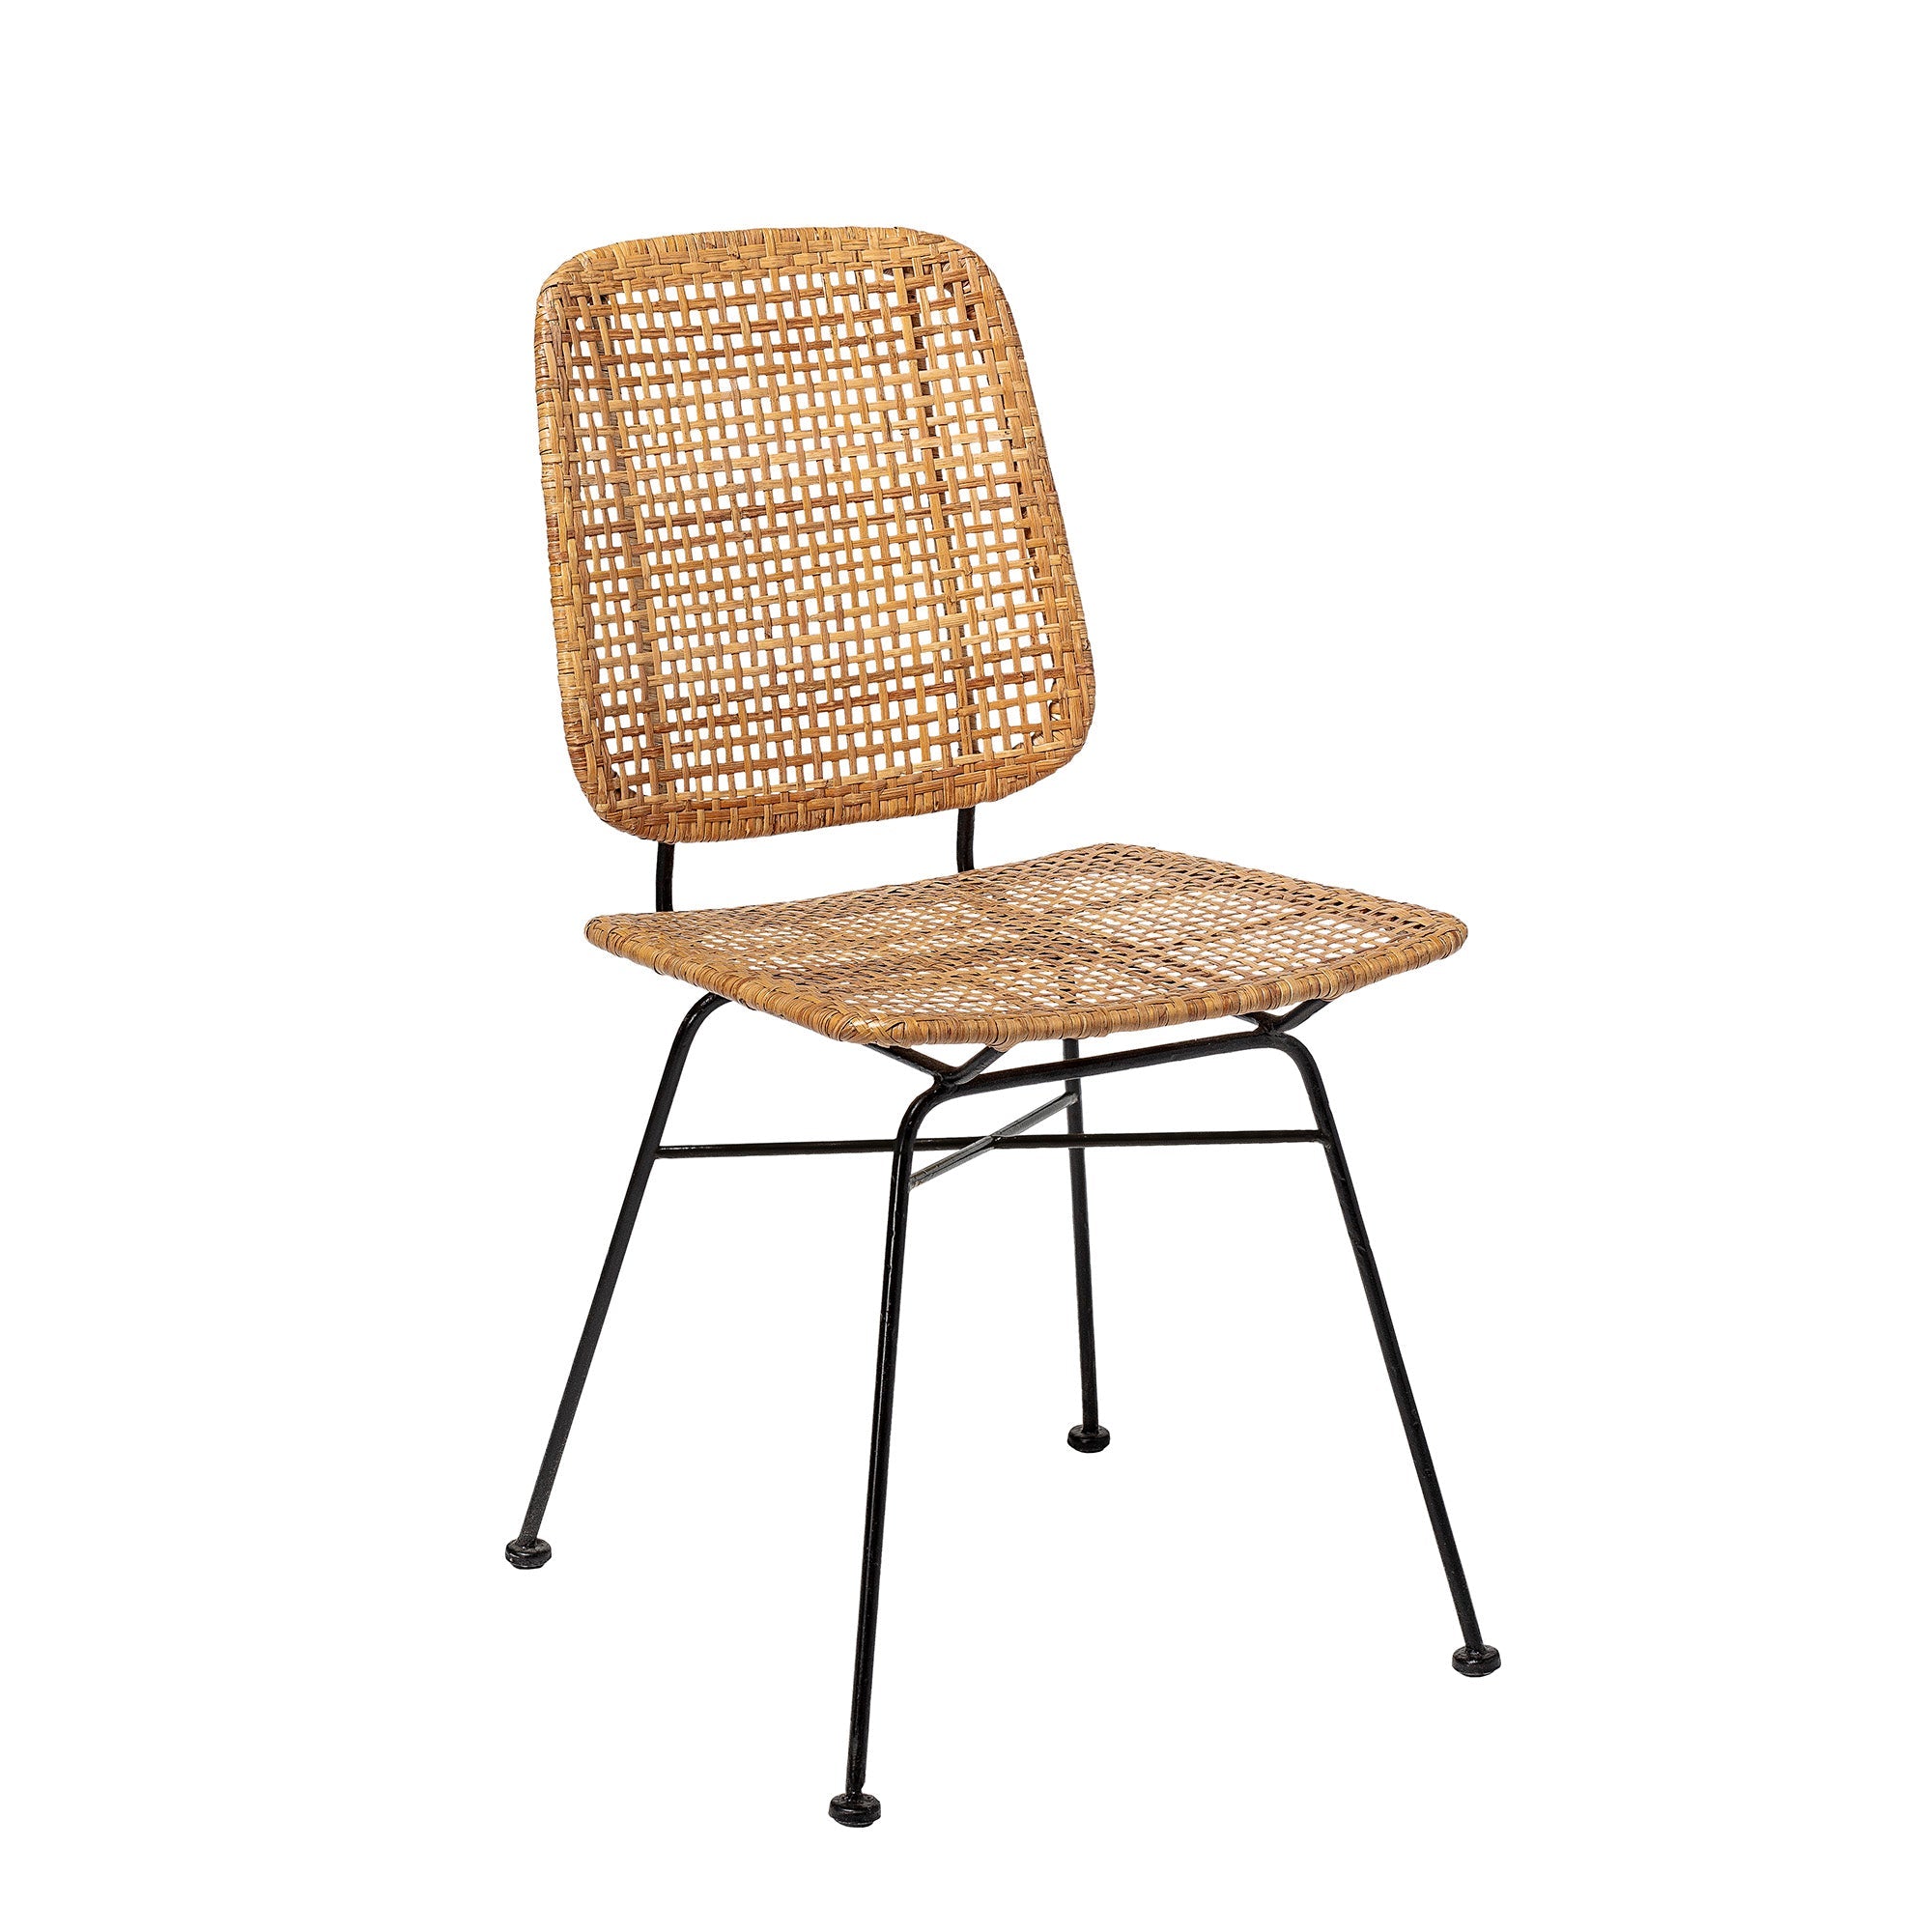 LAUR rattan chair, Bloomingville, Eye on Design